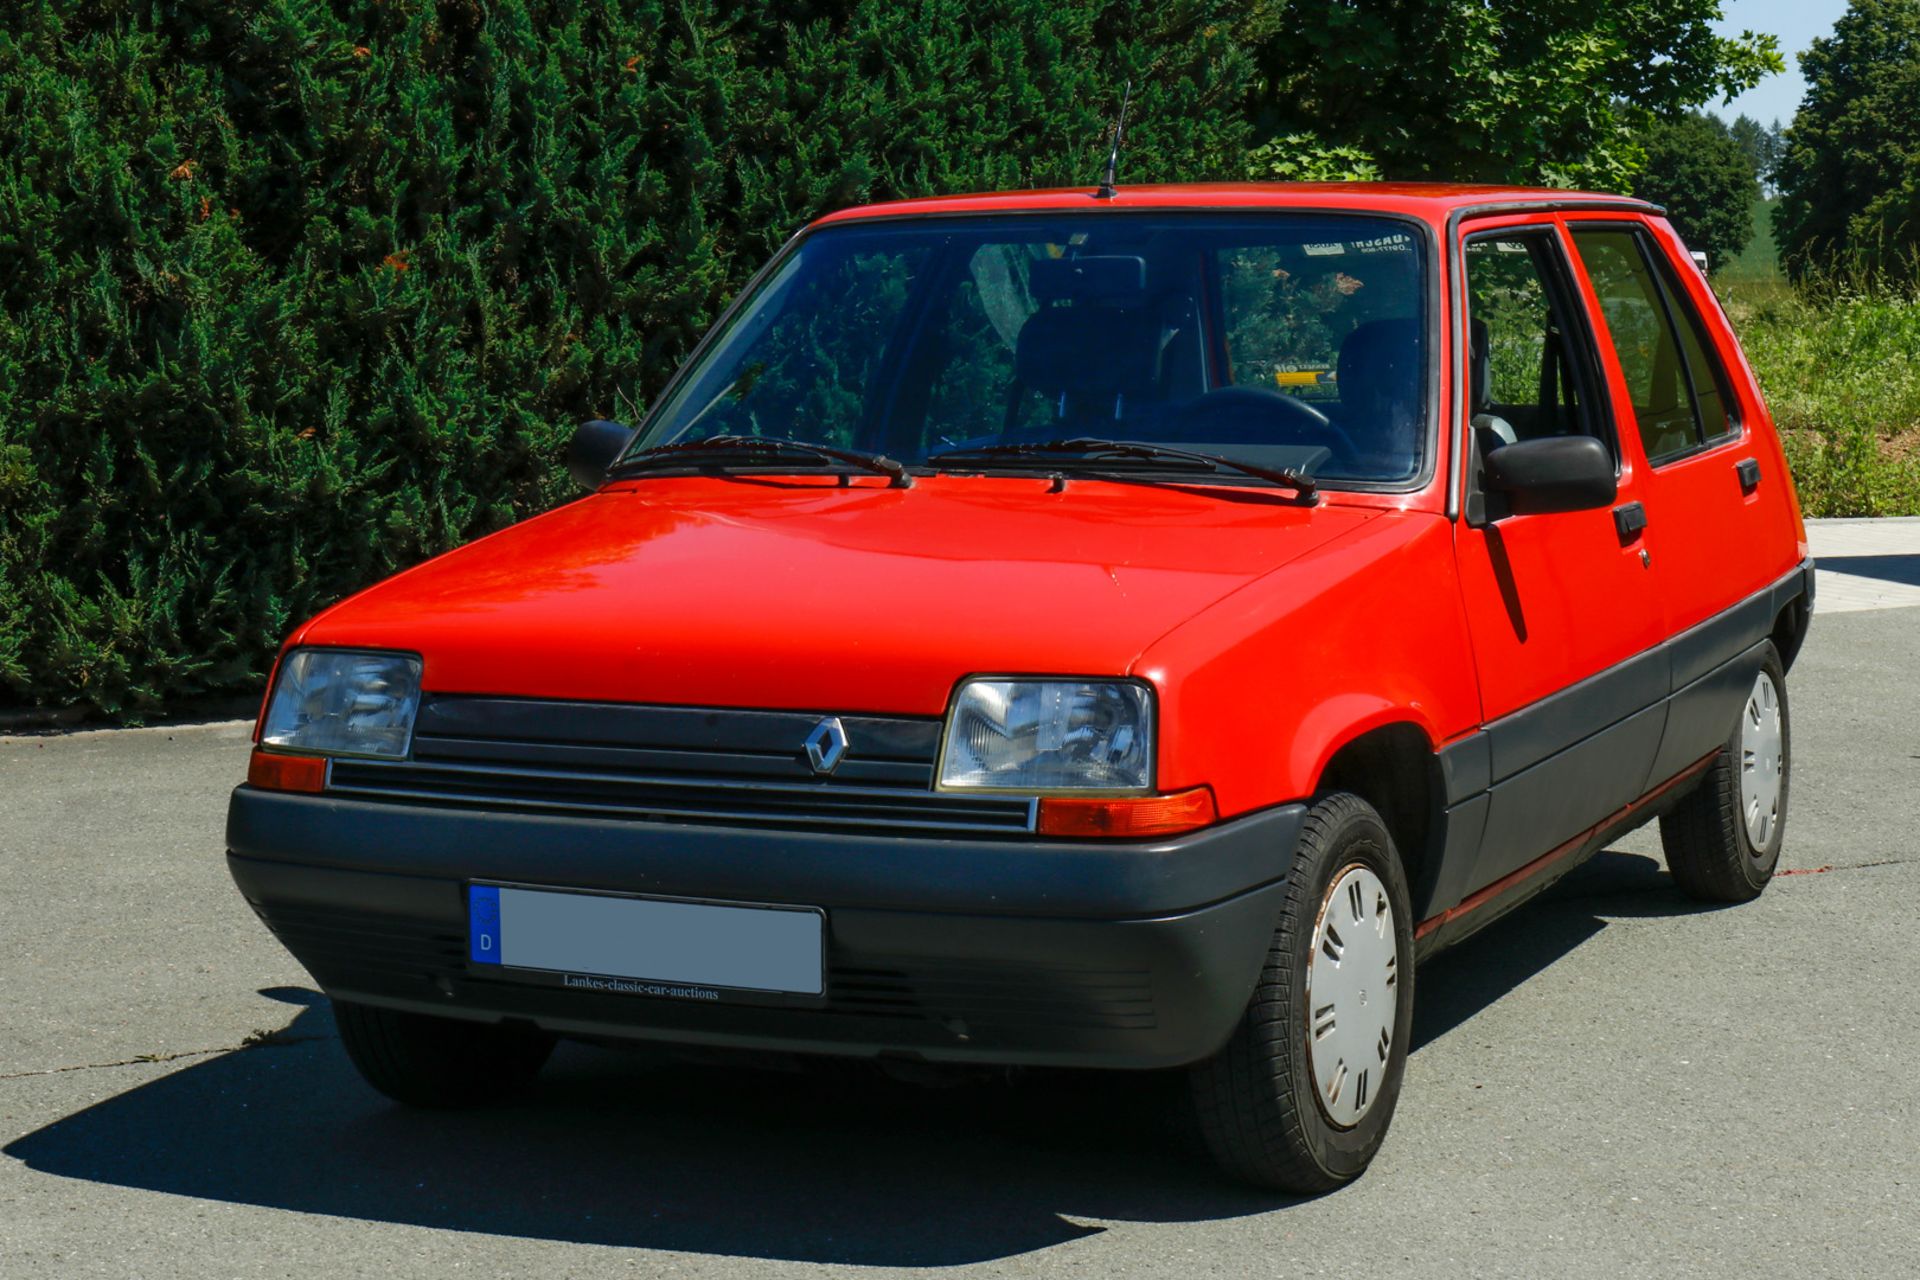 Renault R5, VP1B40 301G05 20581, Bj. 2.4.1986, KW49/5250, 5-Türig, Automatic, Original